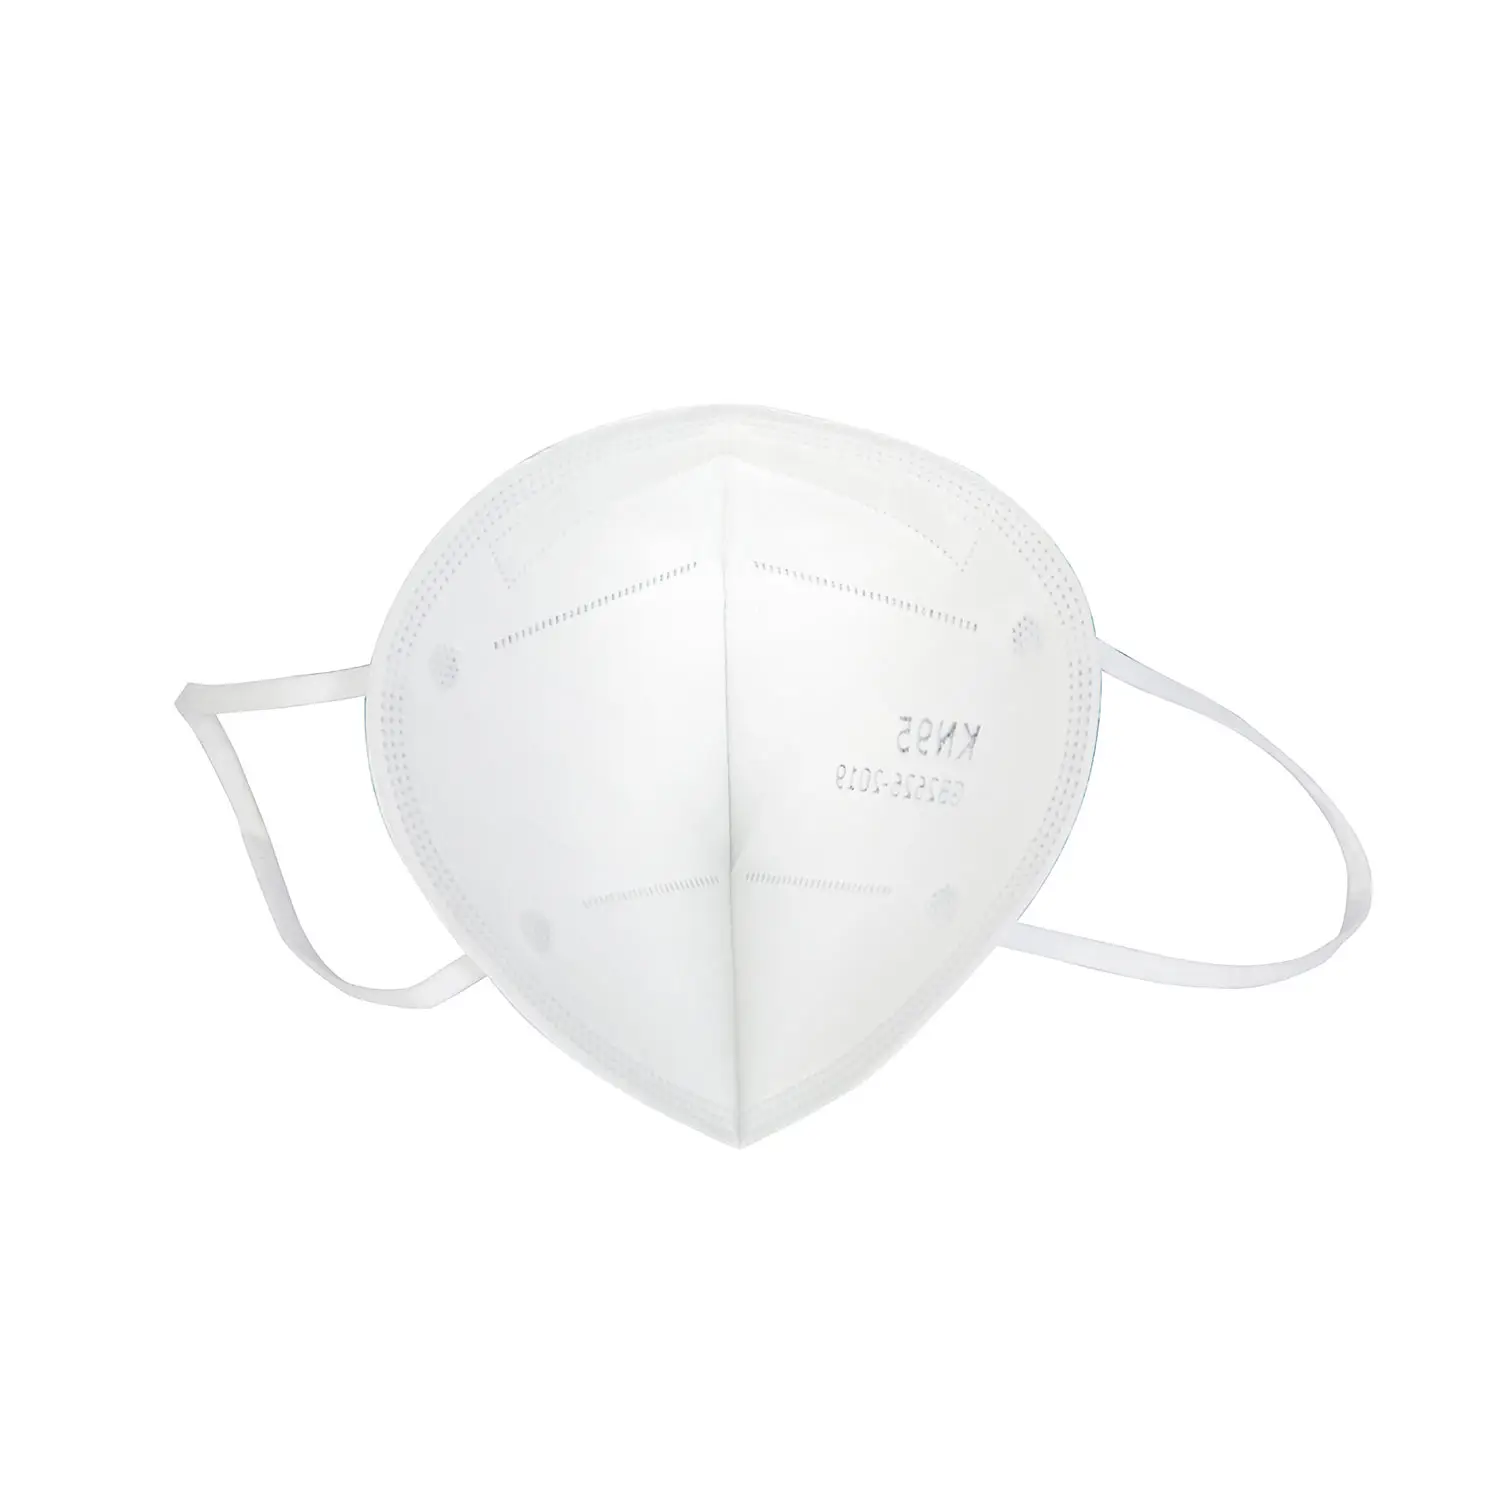 [FREE  SAMPLE] ZHONG JIANLE white kn95 maskss disposable face shield respirators maskkn95 facemask